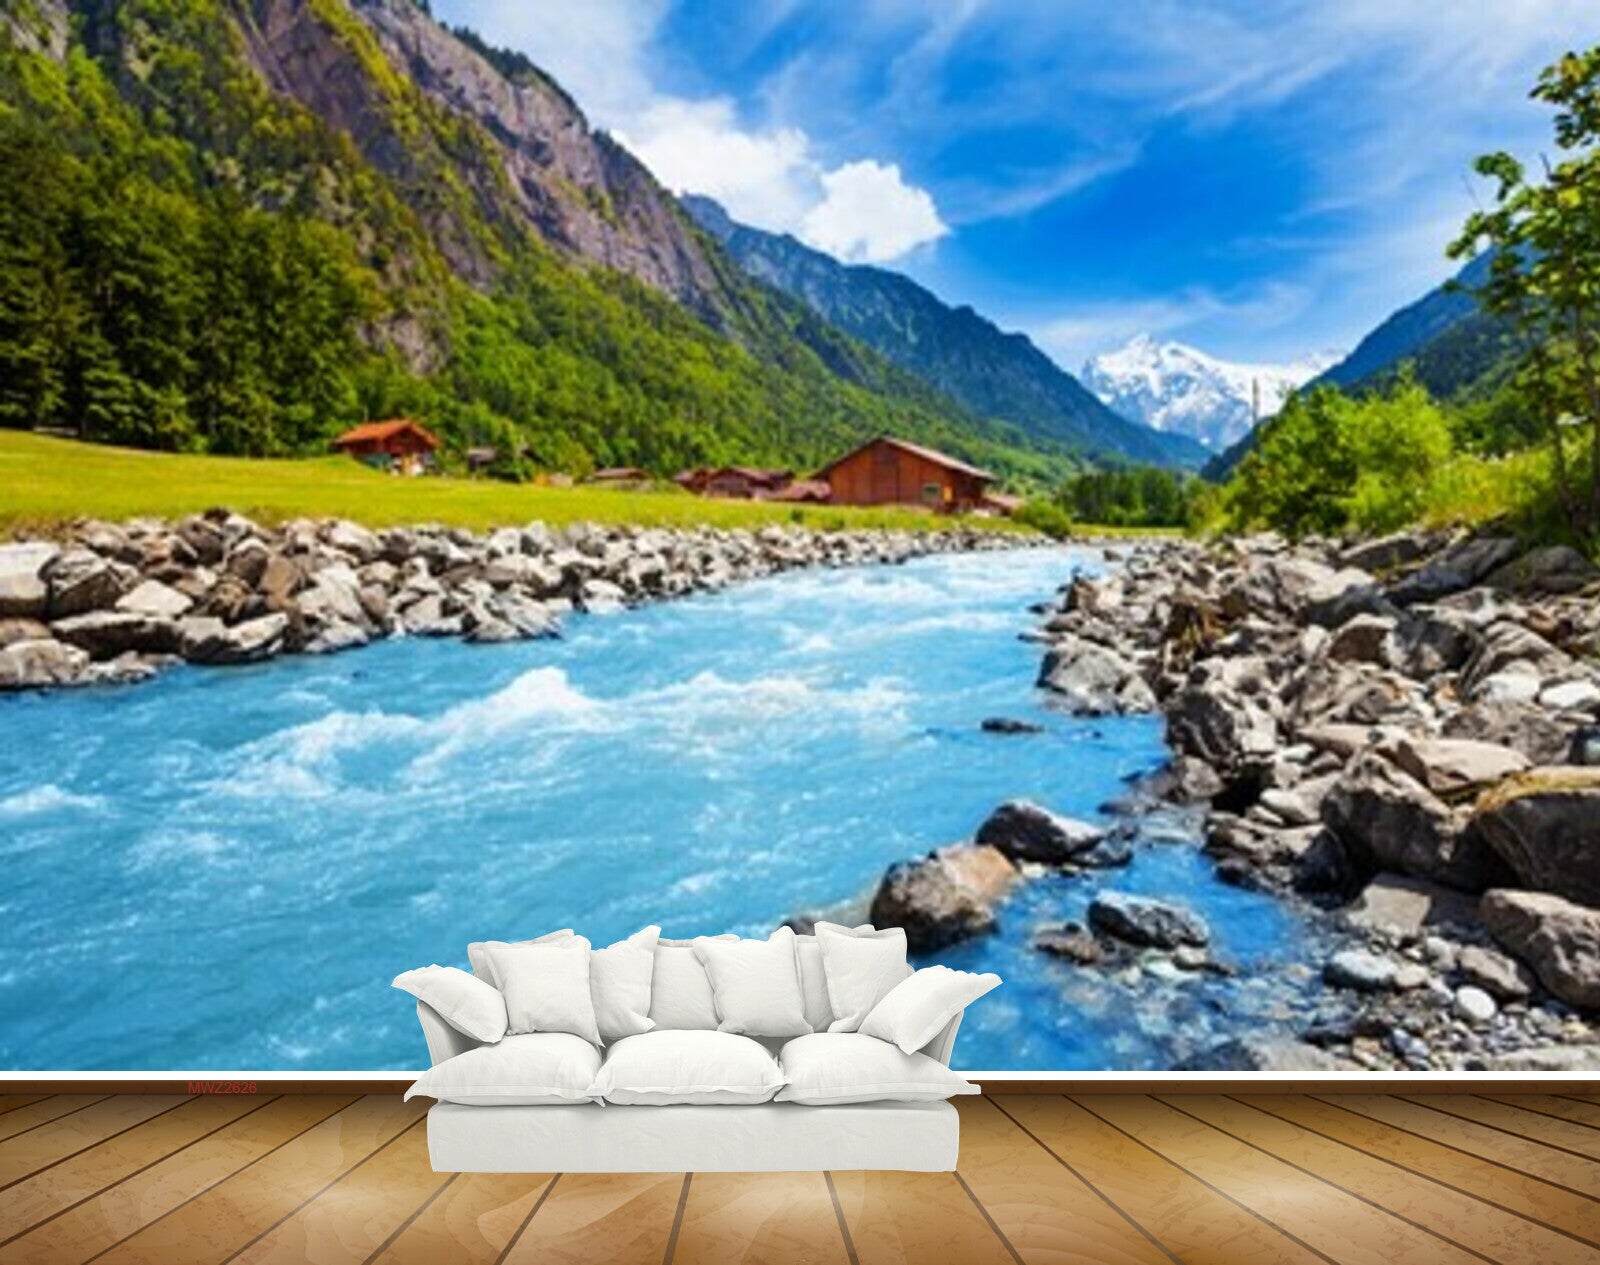 Creek bed 1080P 2K 4K 5K HD wallpapers free download  Wallpaper Flare